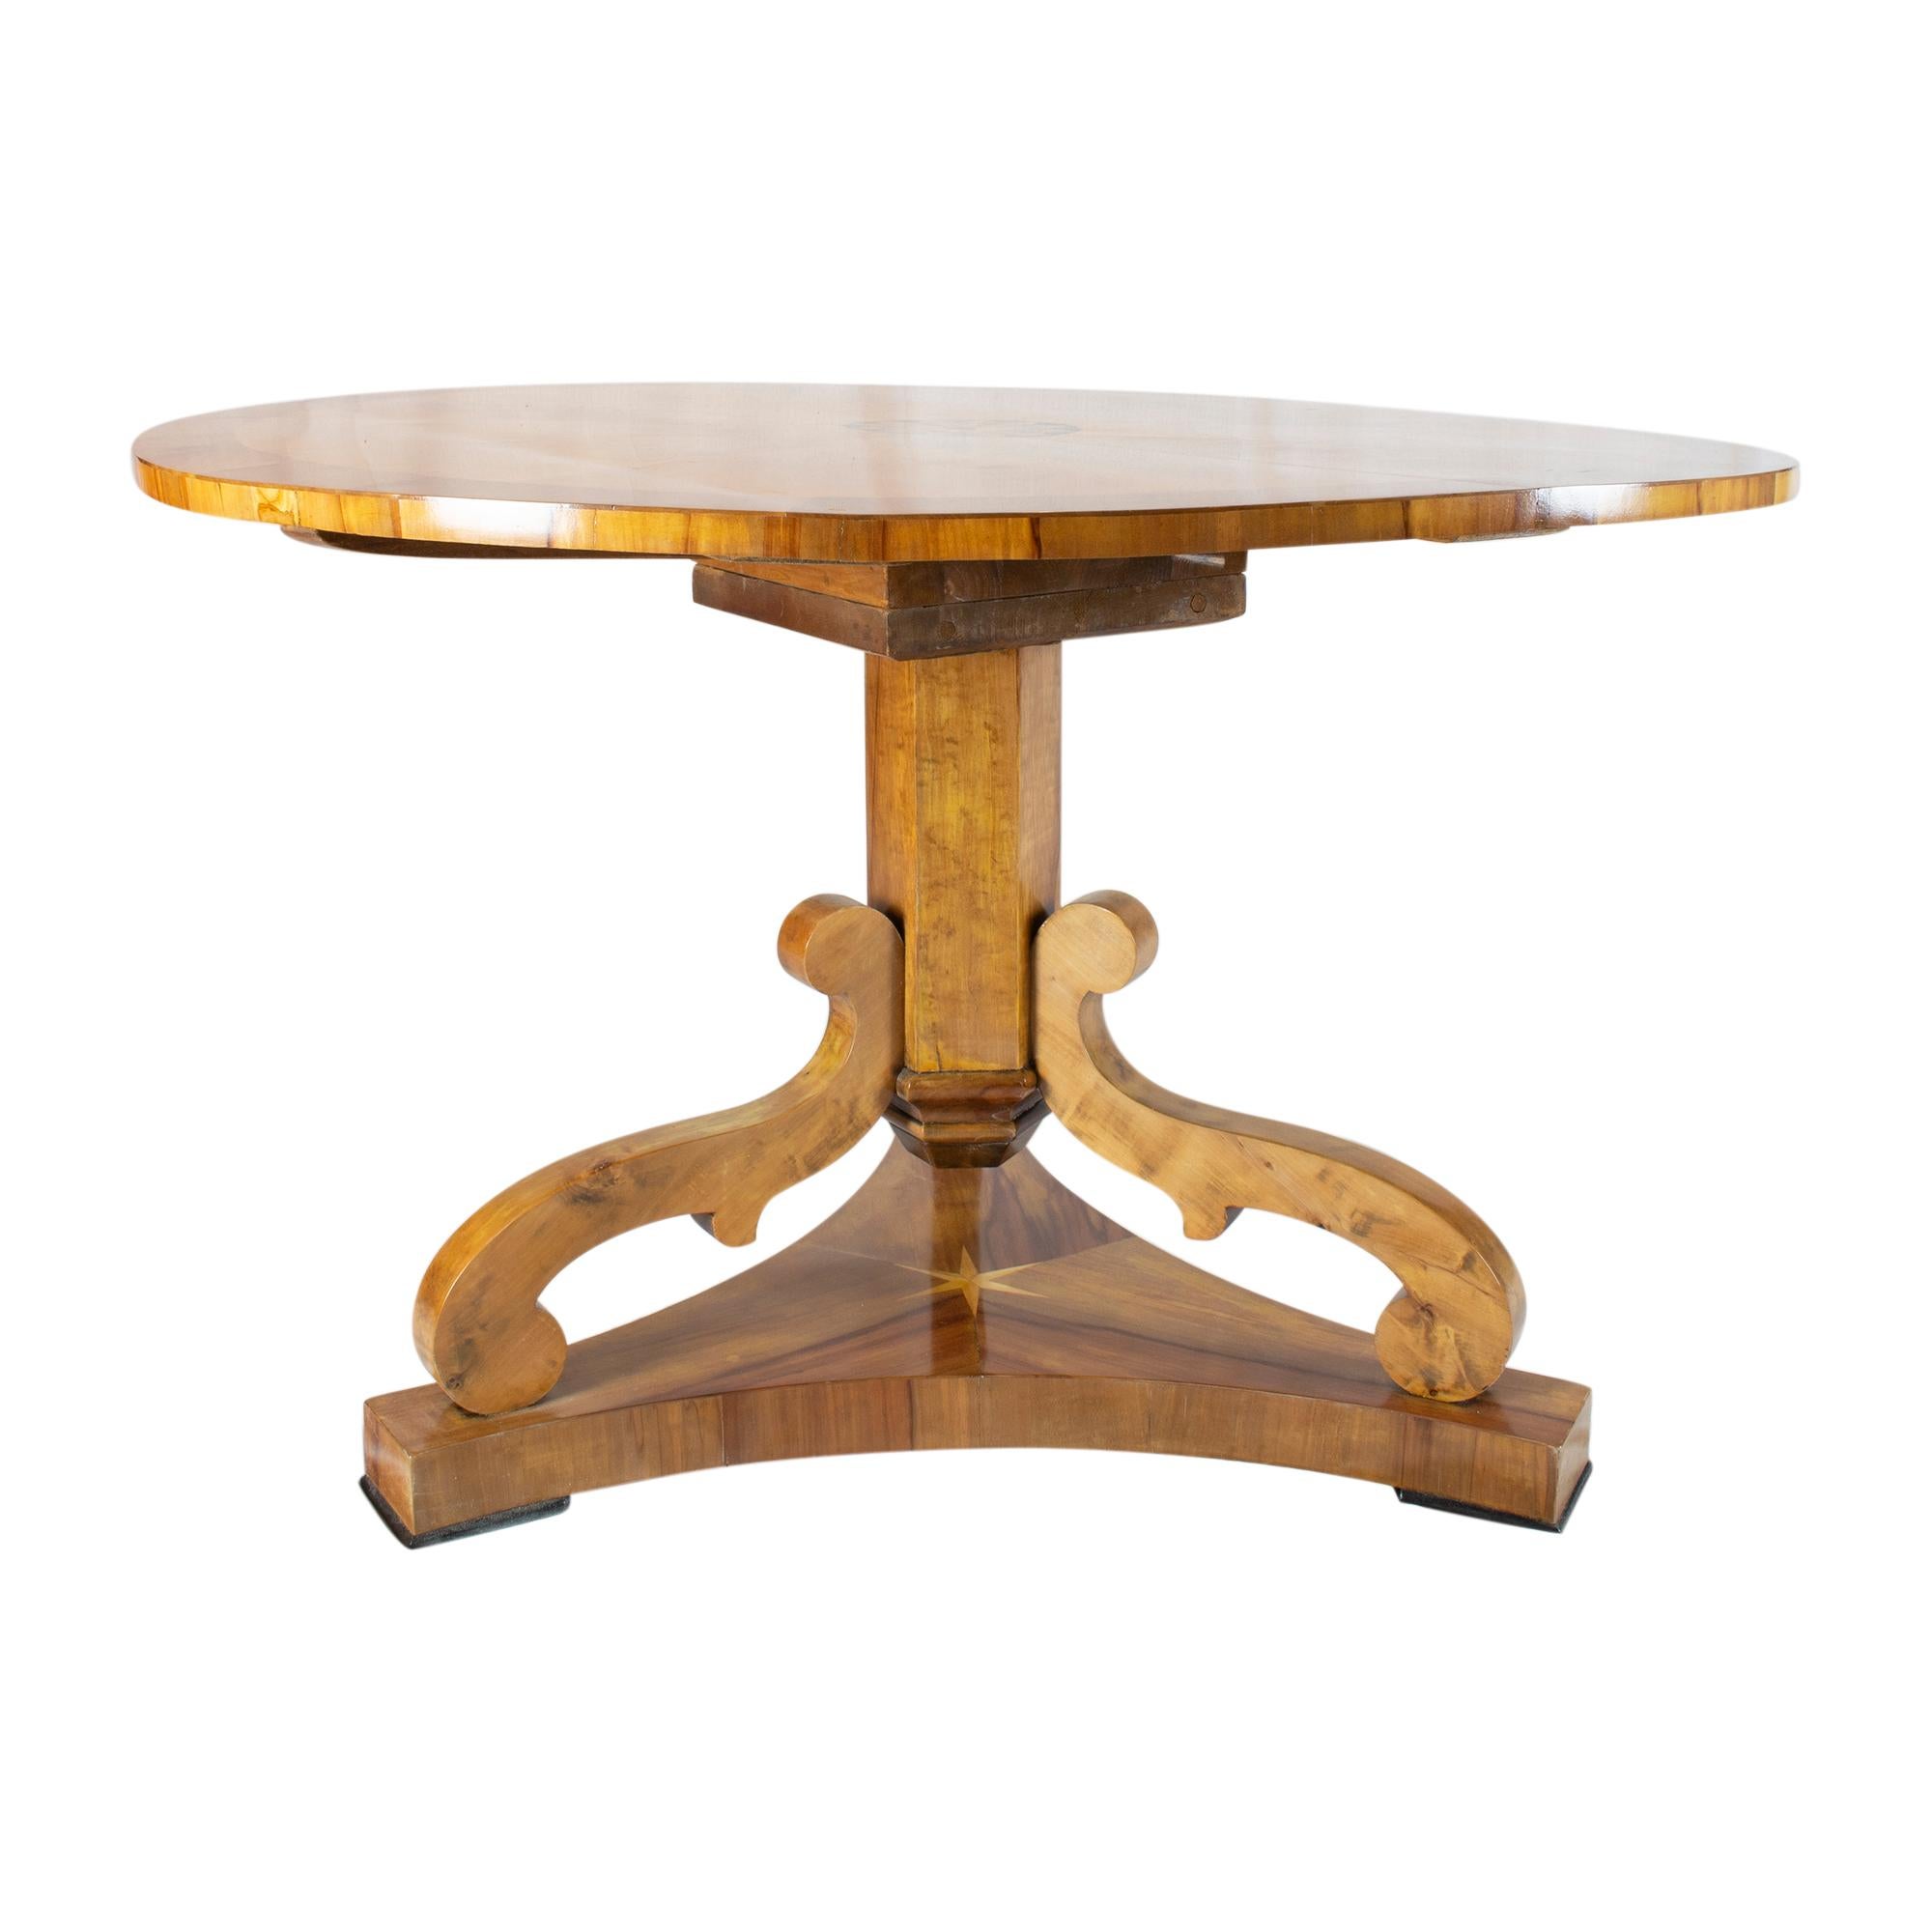 Polished 19th Century Biedermeier Round Birch Table